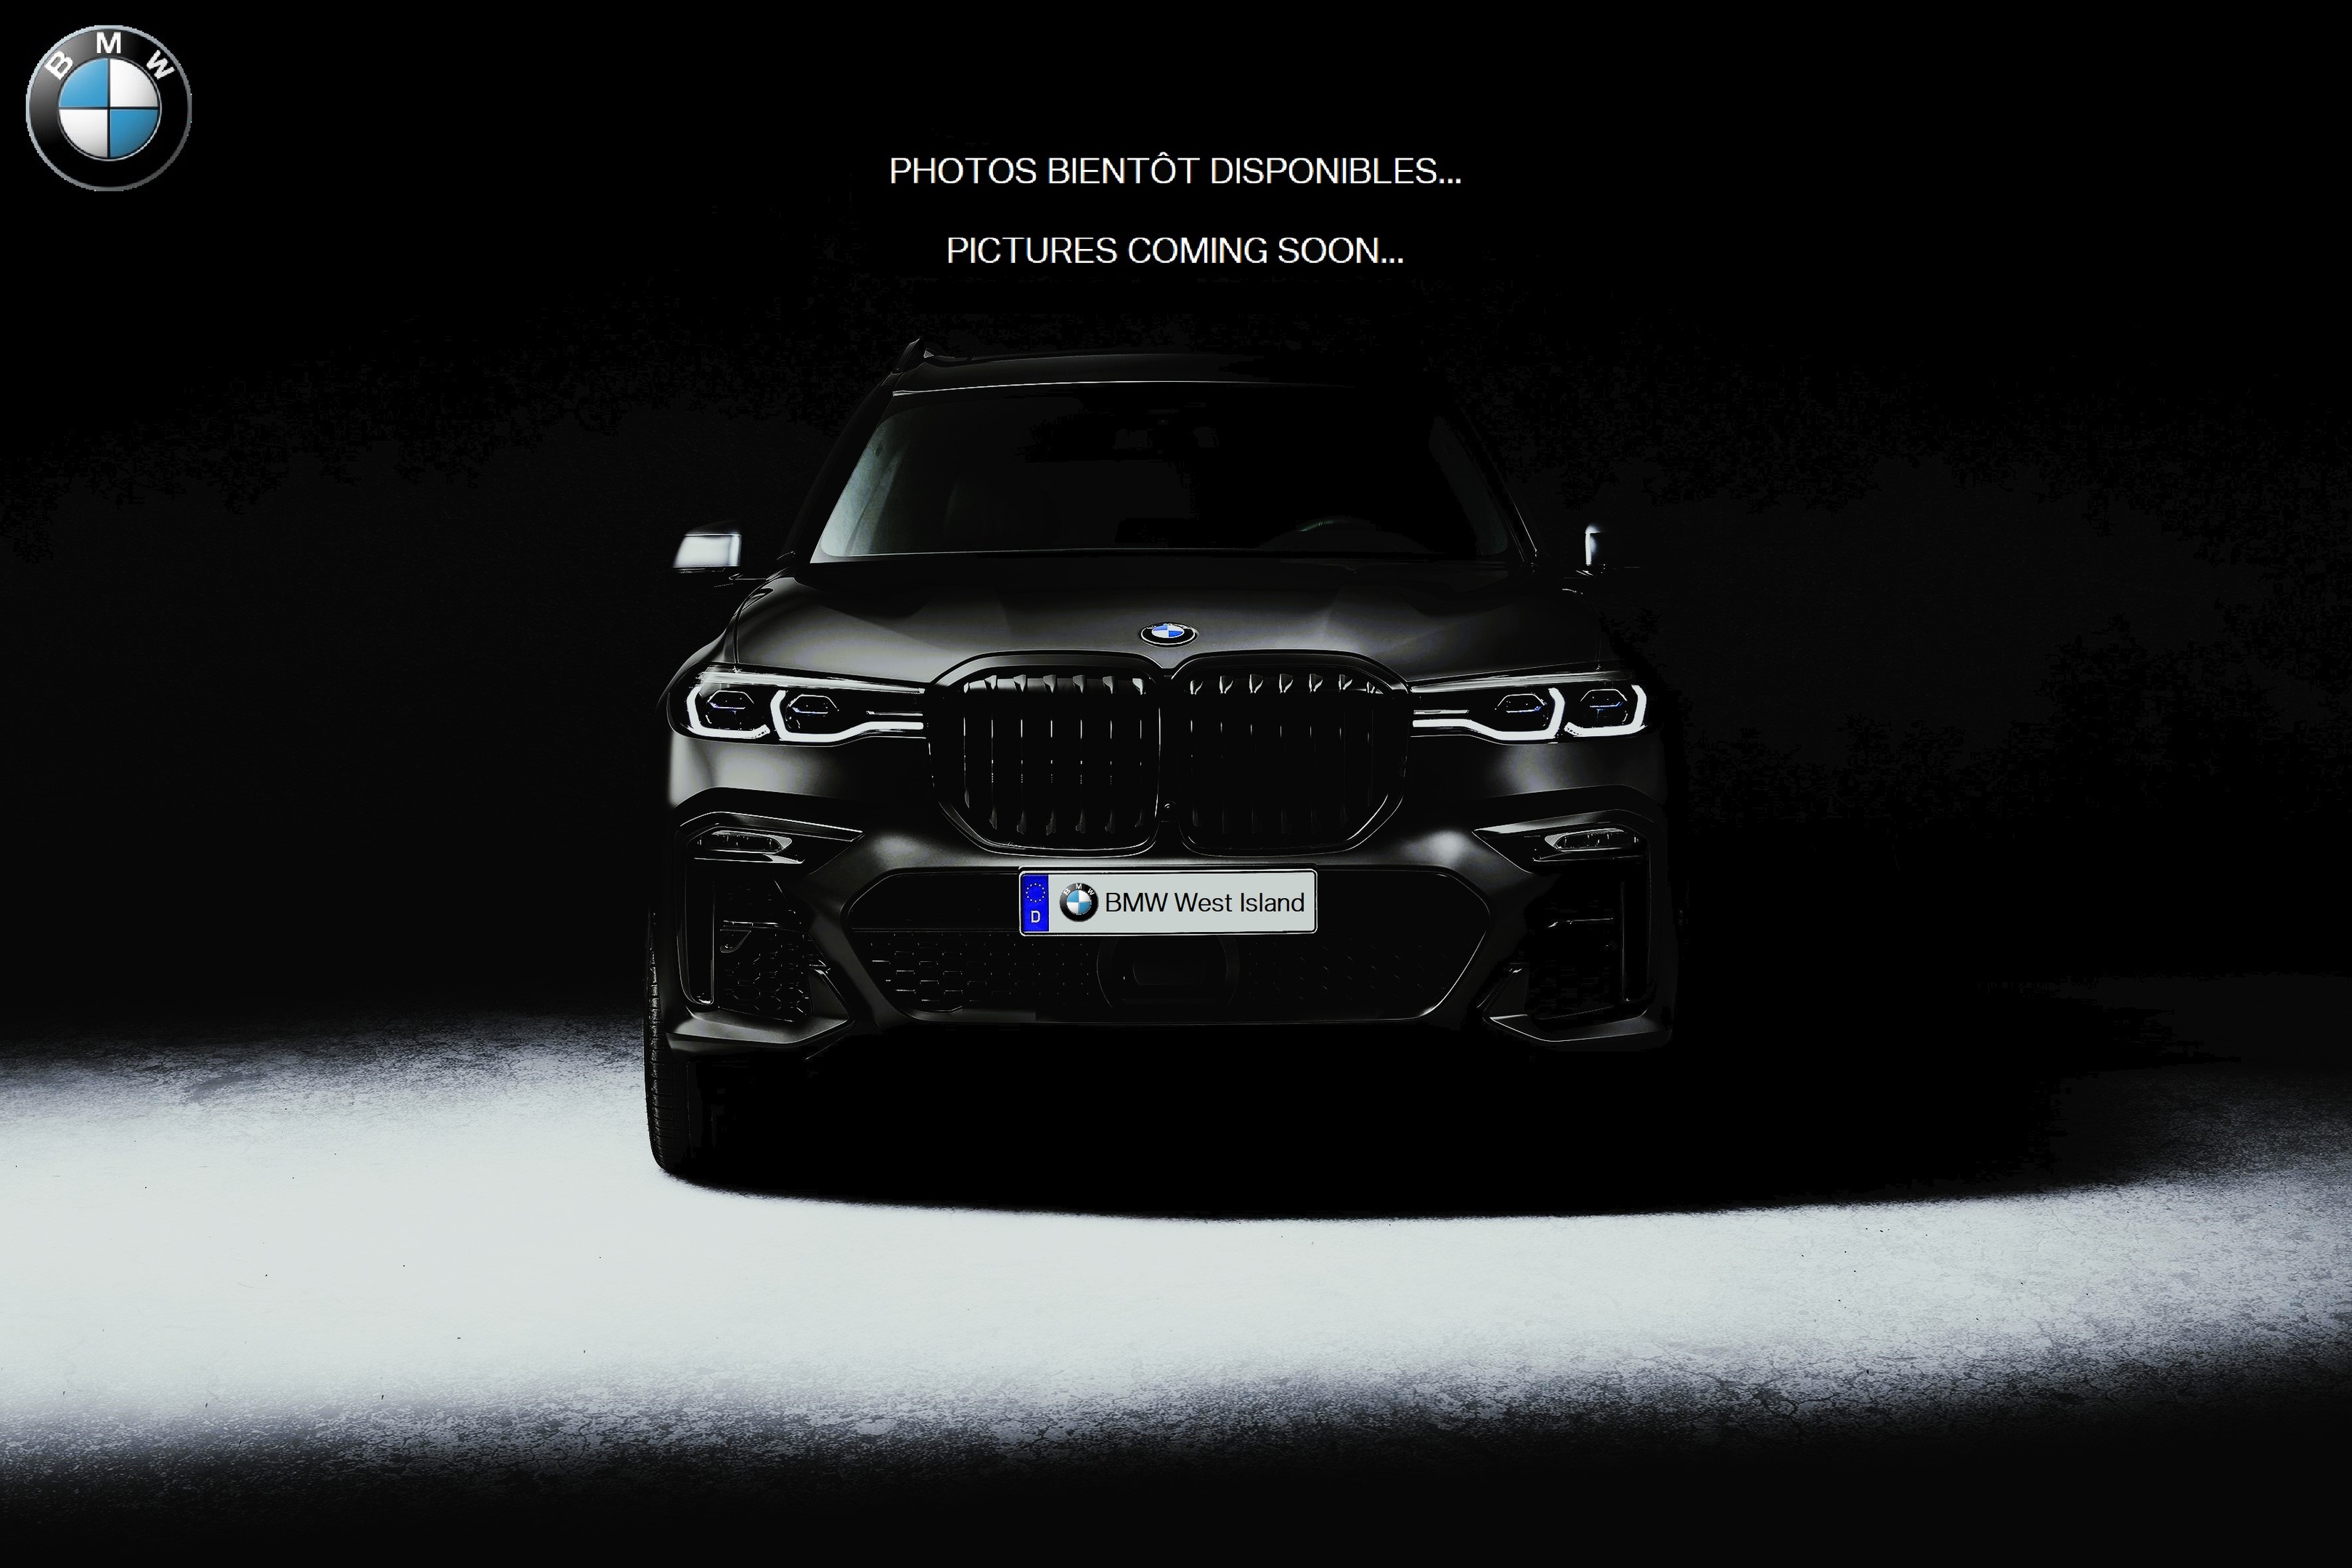 2019 BMW X3 Série Certifié de BMW - Premium Essential Package